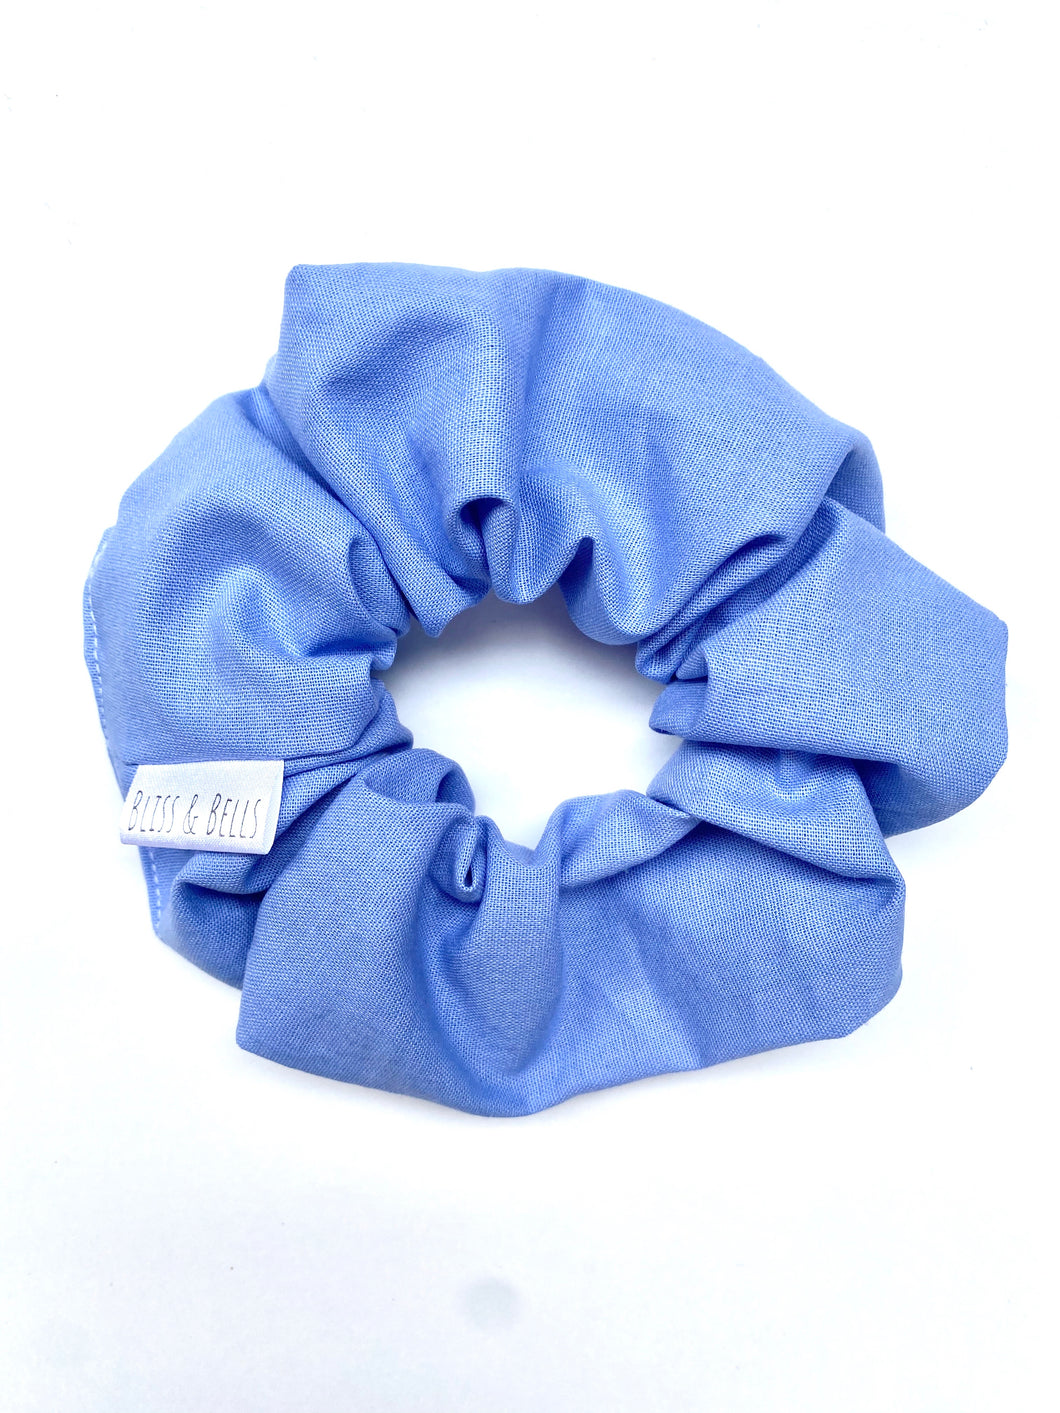 Light Blue Scrunchie - Handmade